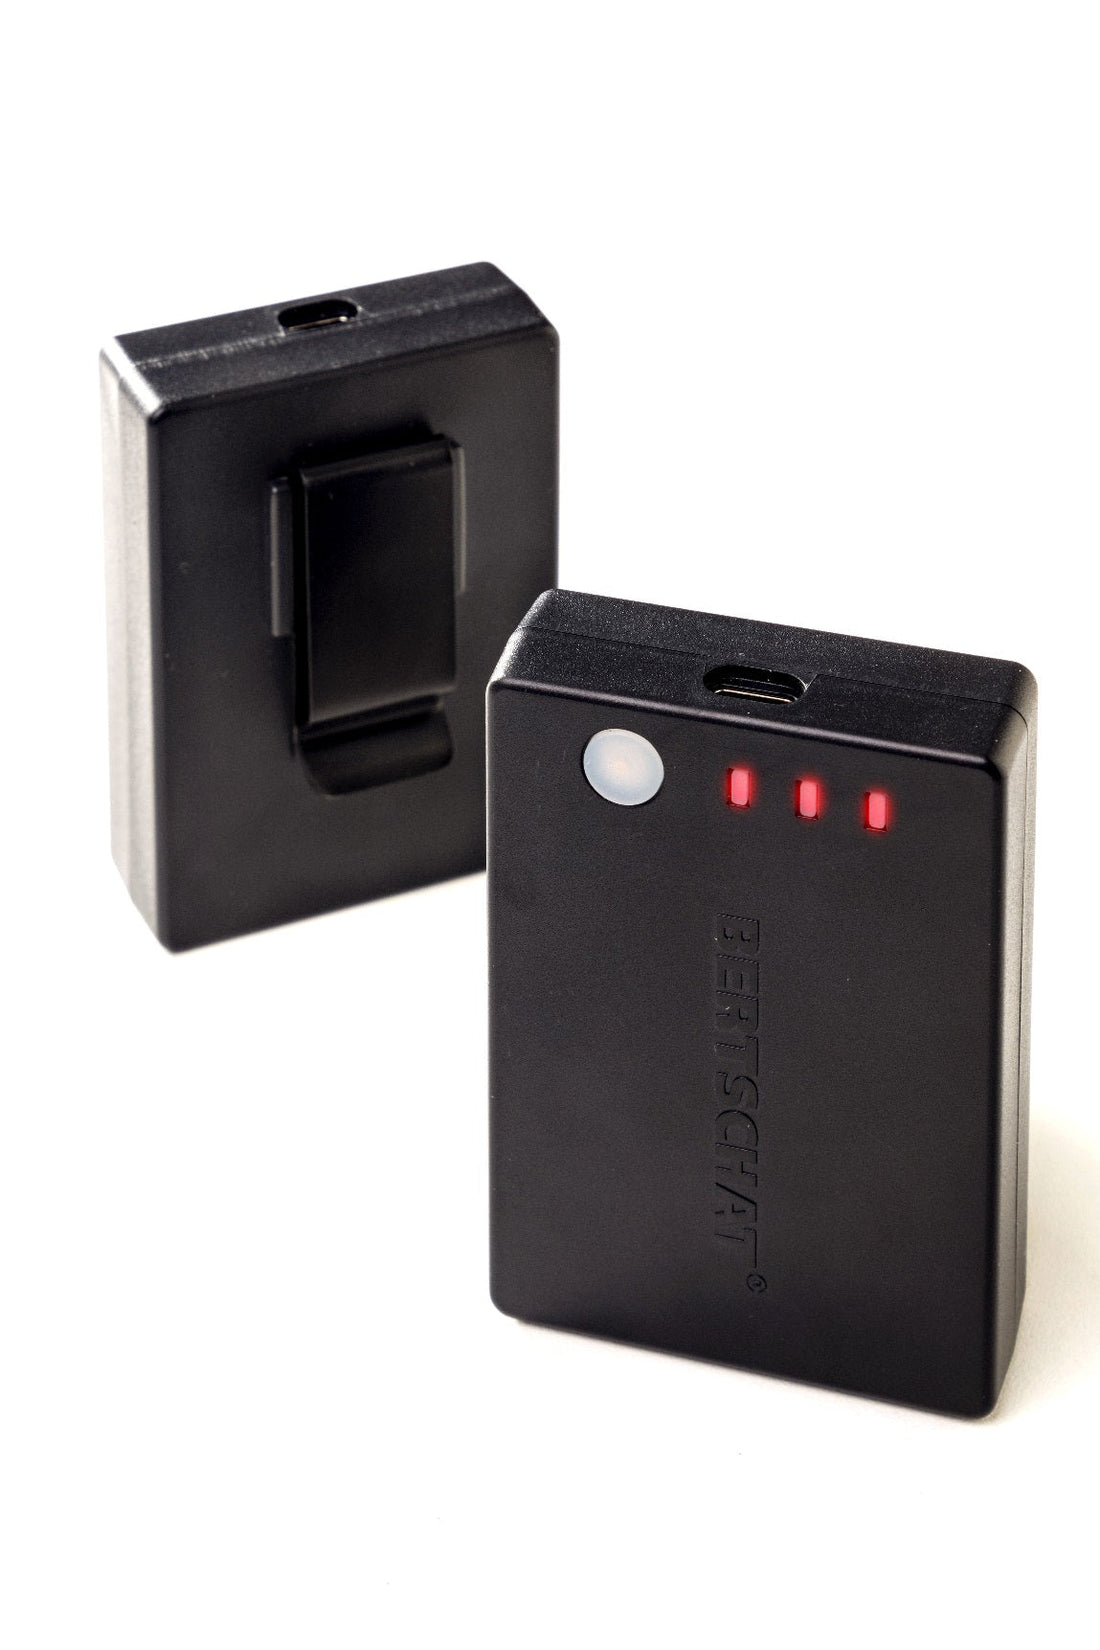 Pack de batteries 3.800 mAh supplémentaire – USB – Semelles Chauffantes Ultra Power